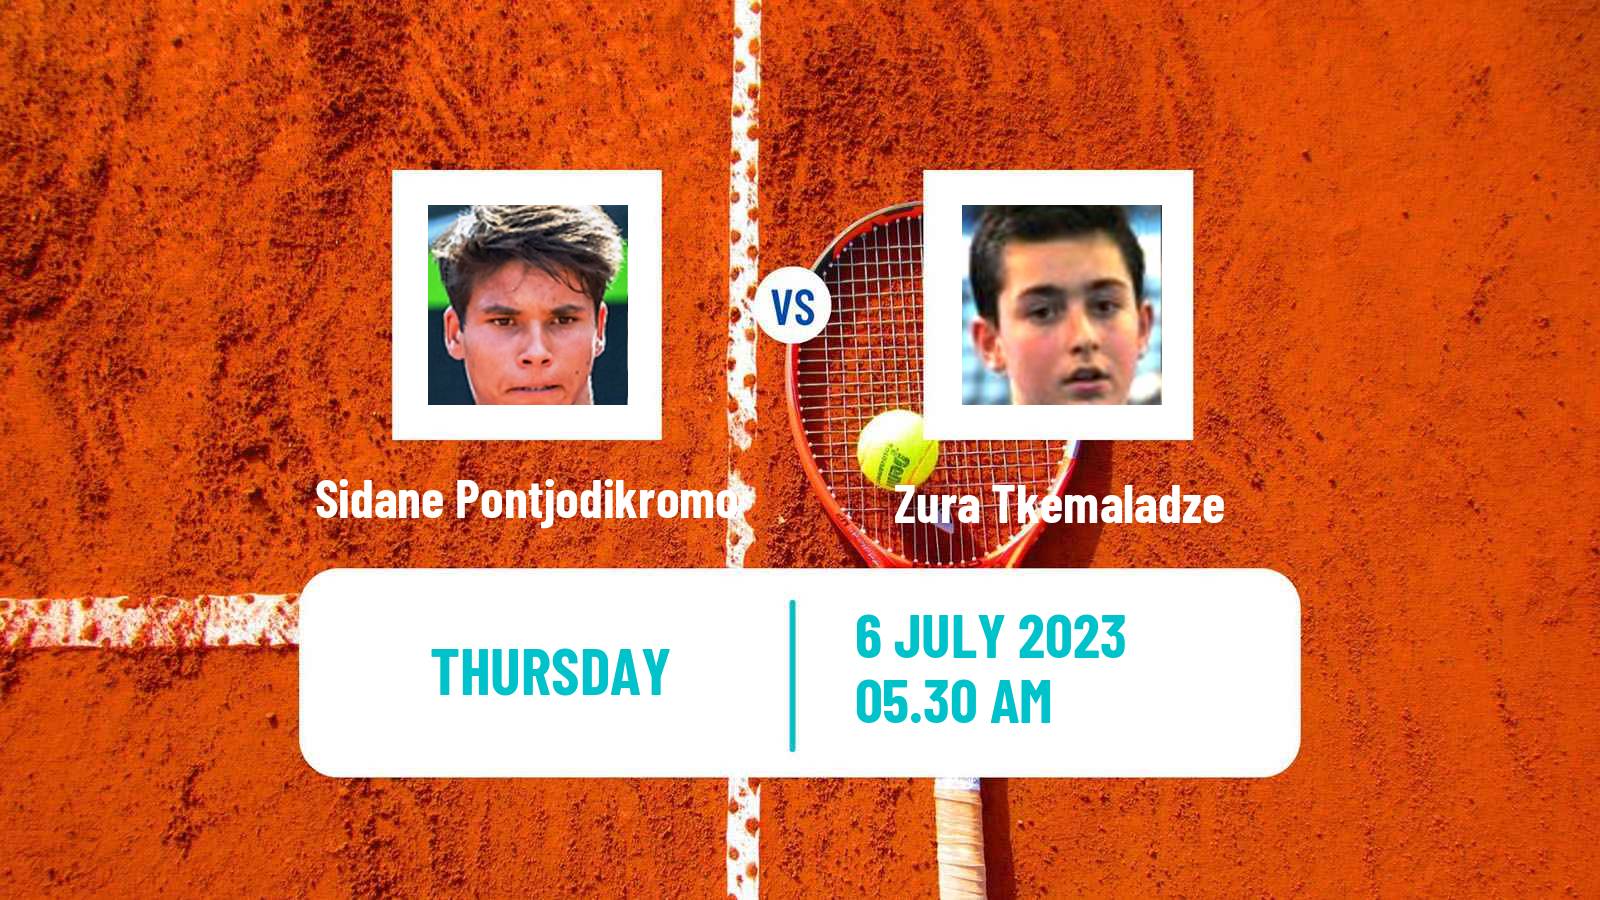 Tennis ITF M25 The Hague Men Sidane Pontjodikromo - Zura Tkemaladze